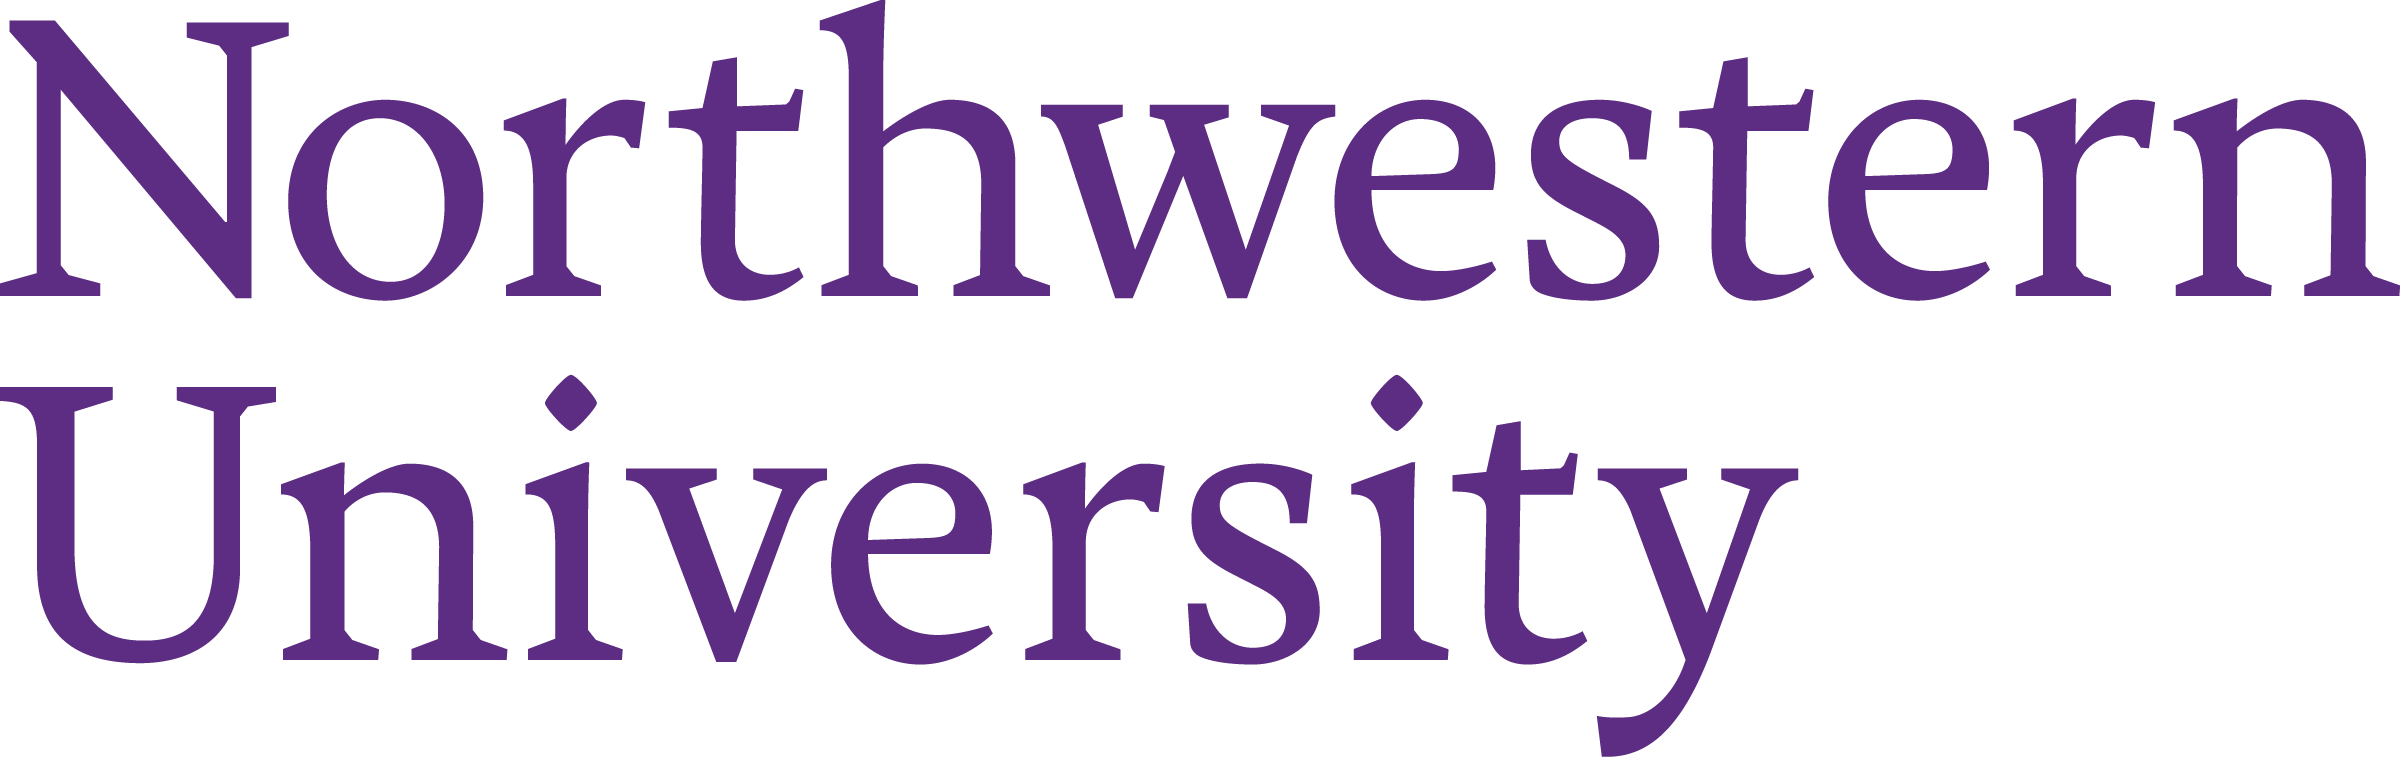 Northwestern University Logo and Seal png